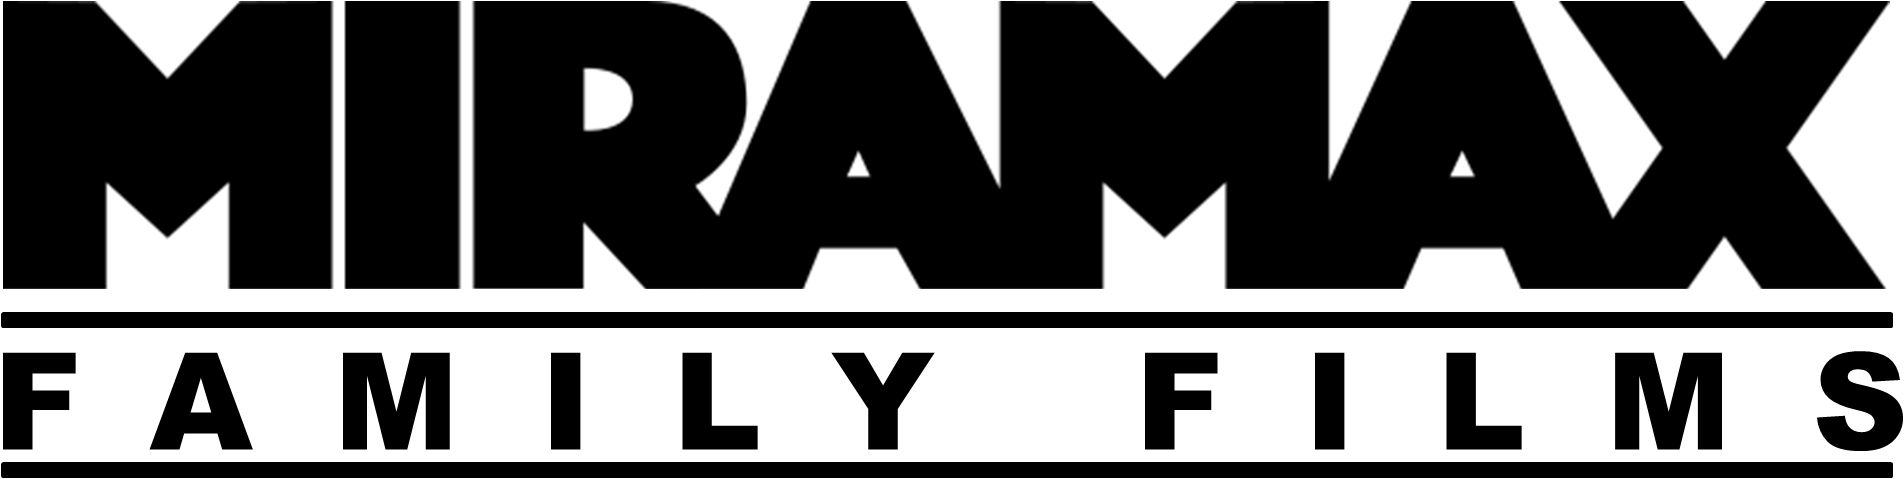 Miramax Films Logo - Miramax Family Films | Logopedia | FANDOM powered by Wikia